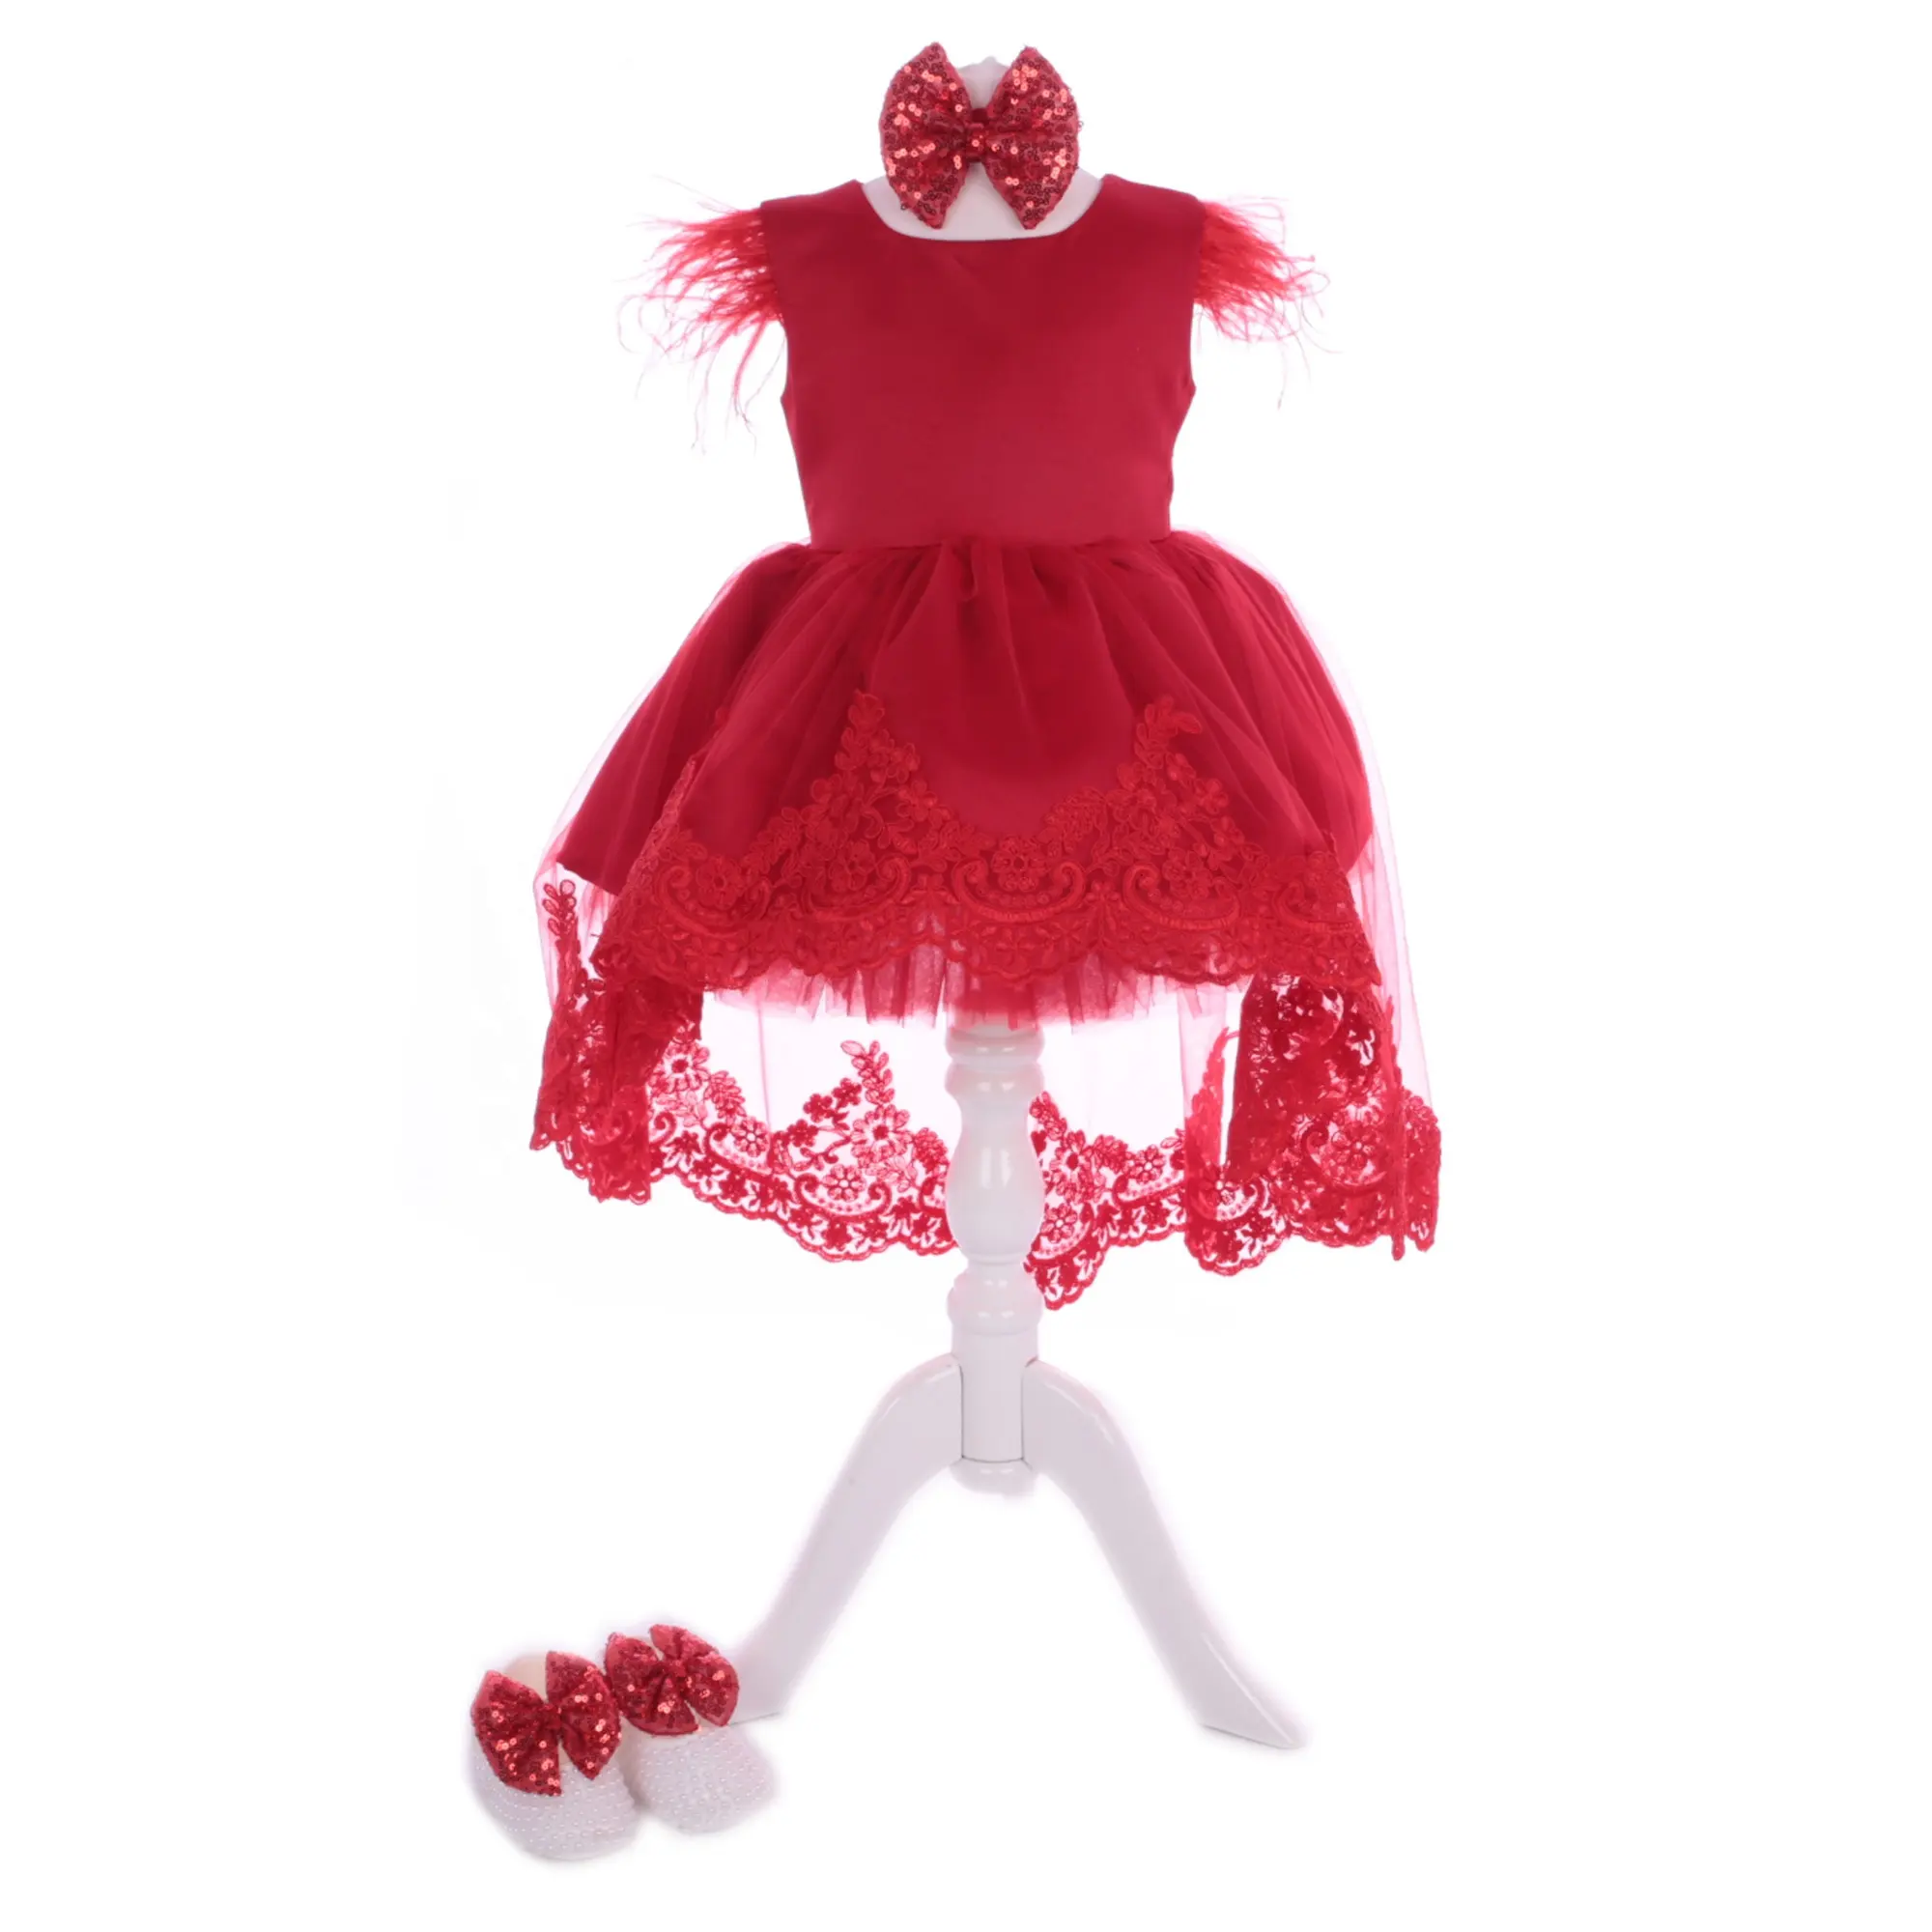 Gaun Merah Modern Kualitas Tinggi Gaun Pesta Ulang Tahun Anak Pernikahan Putri Bayi Perempuan Gaun Pakaian Gaun Anak Perempuan